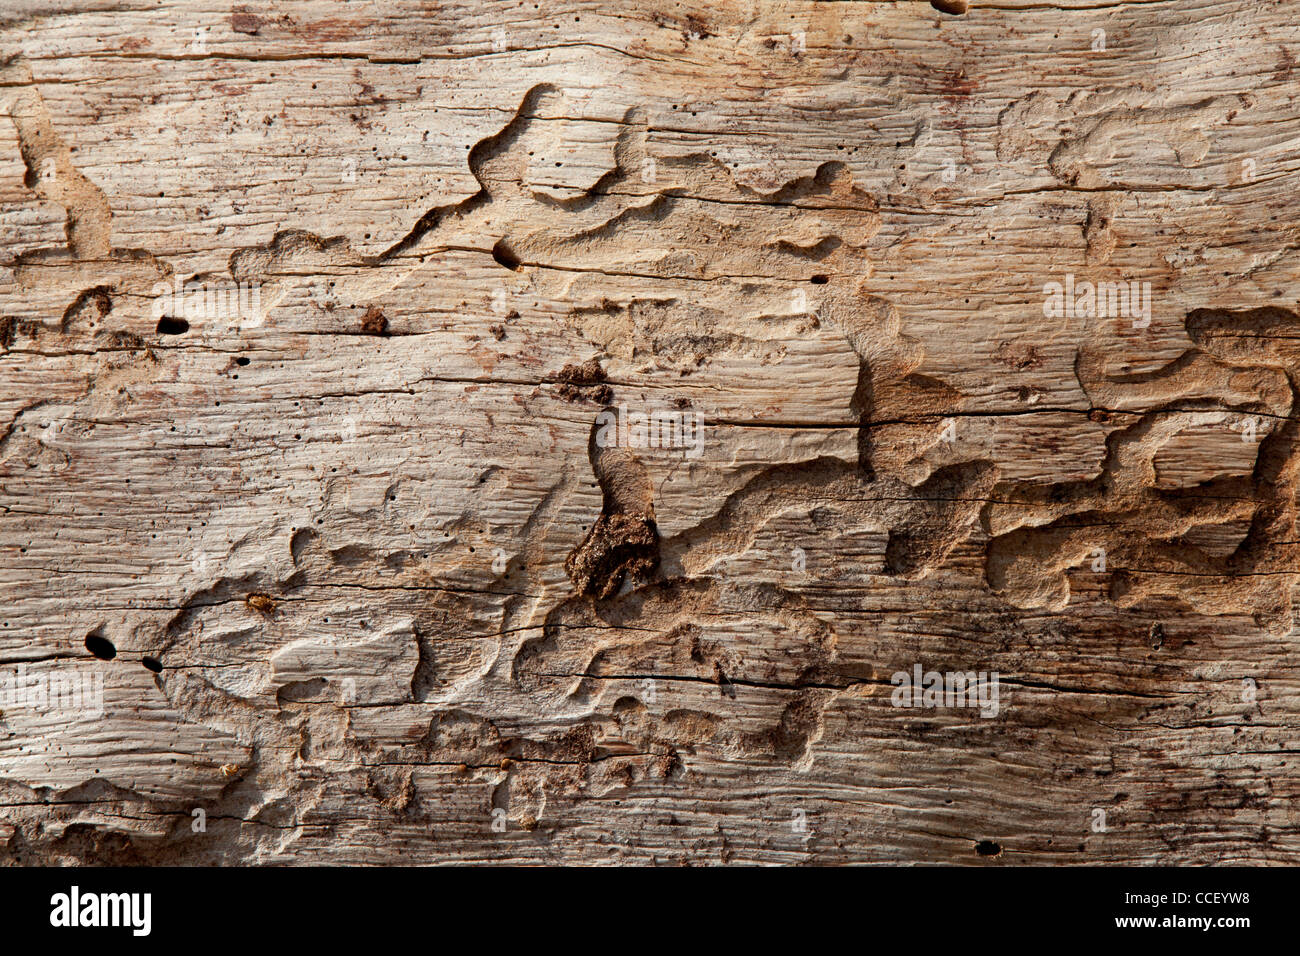 Close-up shot of wood grain pattern Banque D'Images